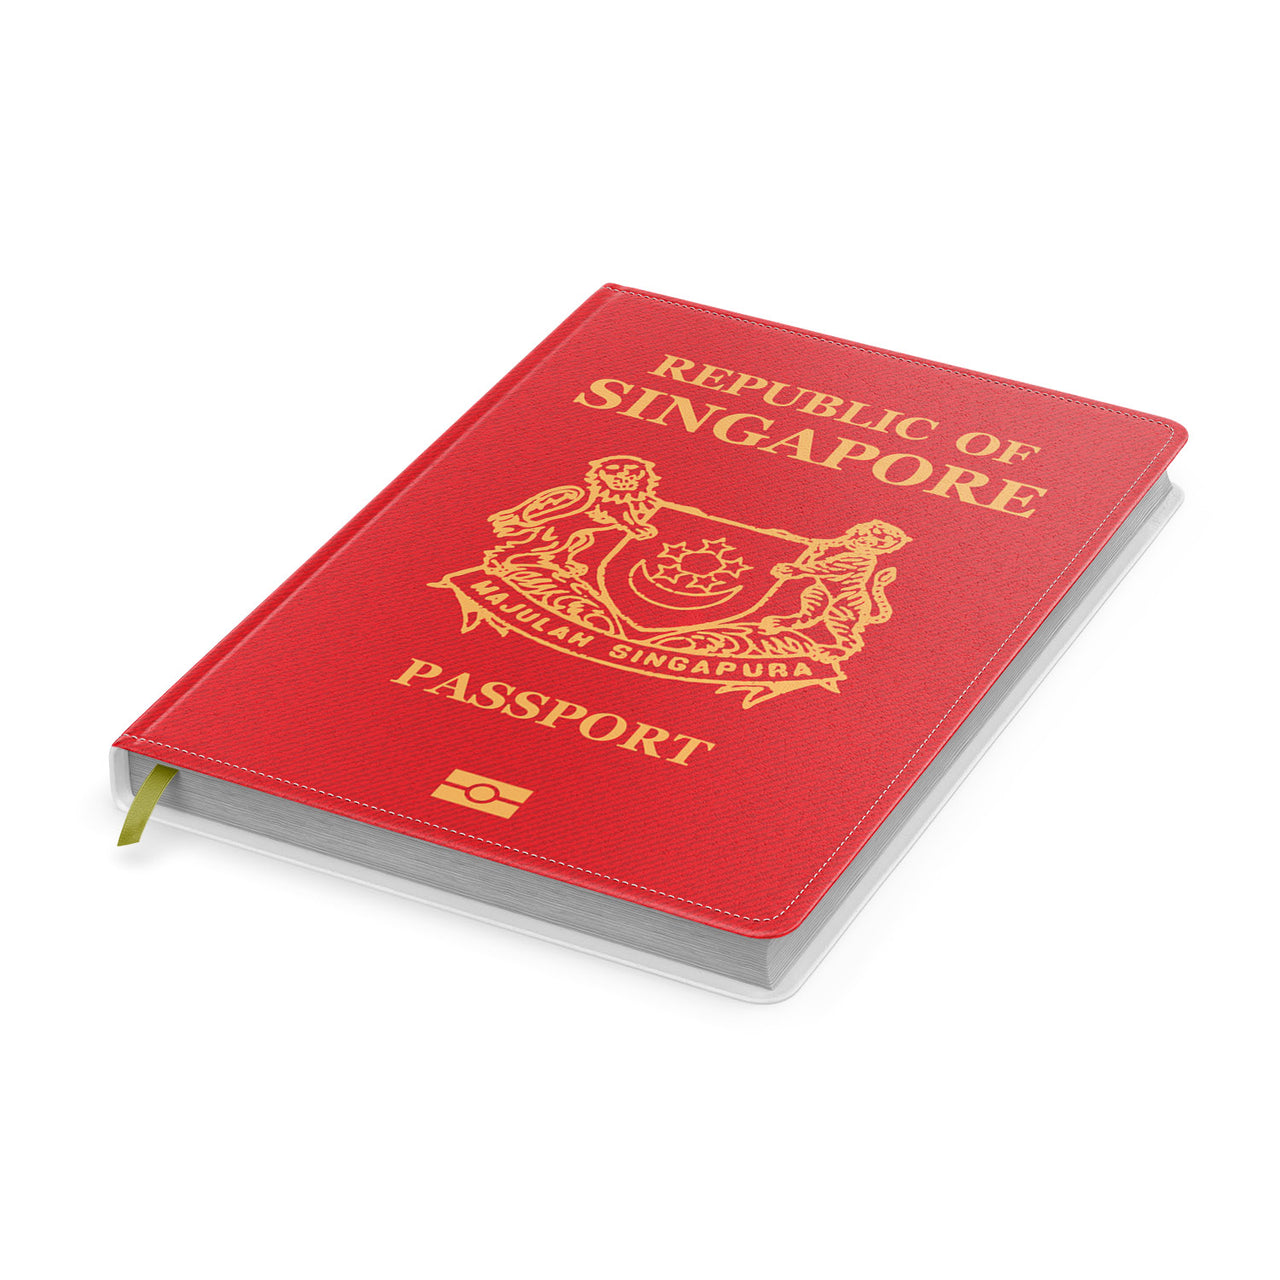 Singapore Passport Designed Notebooks